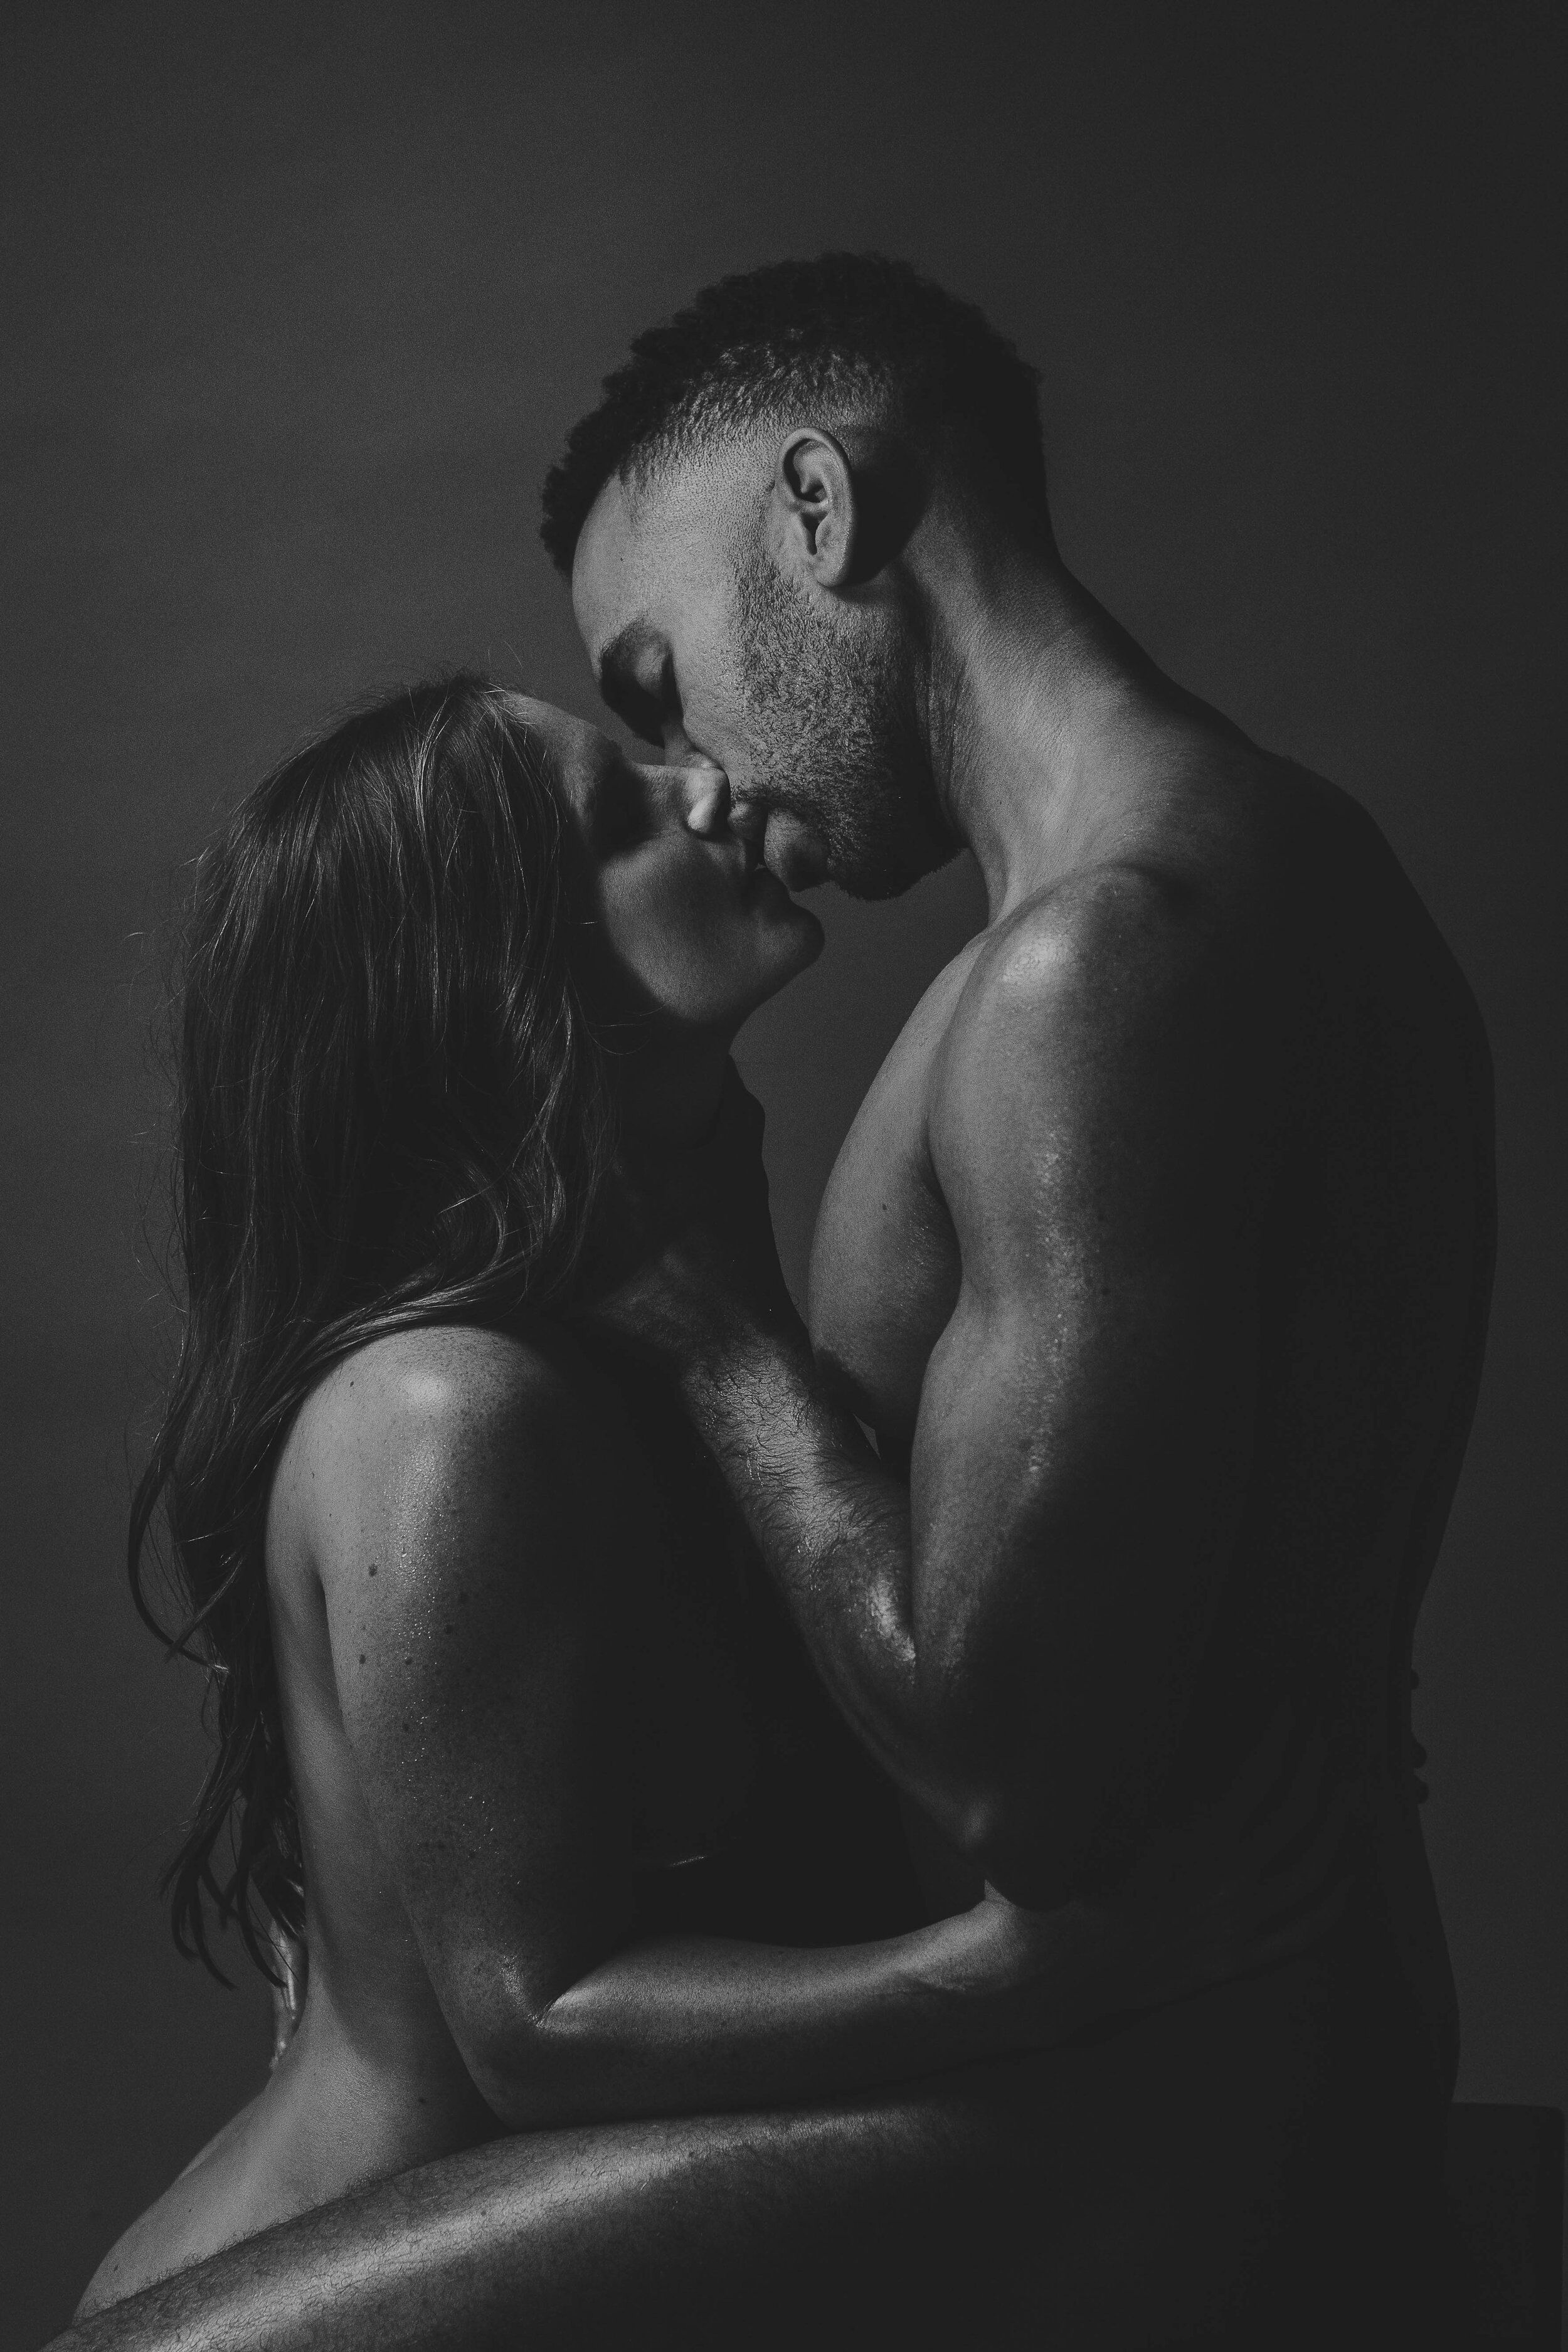 Erotic interracial photography ❤️ Best adult photos at doai